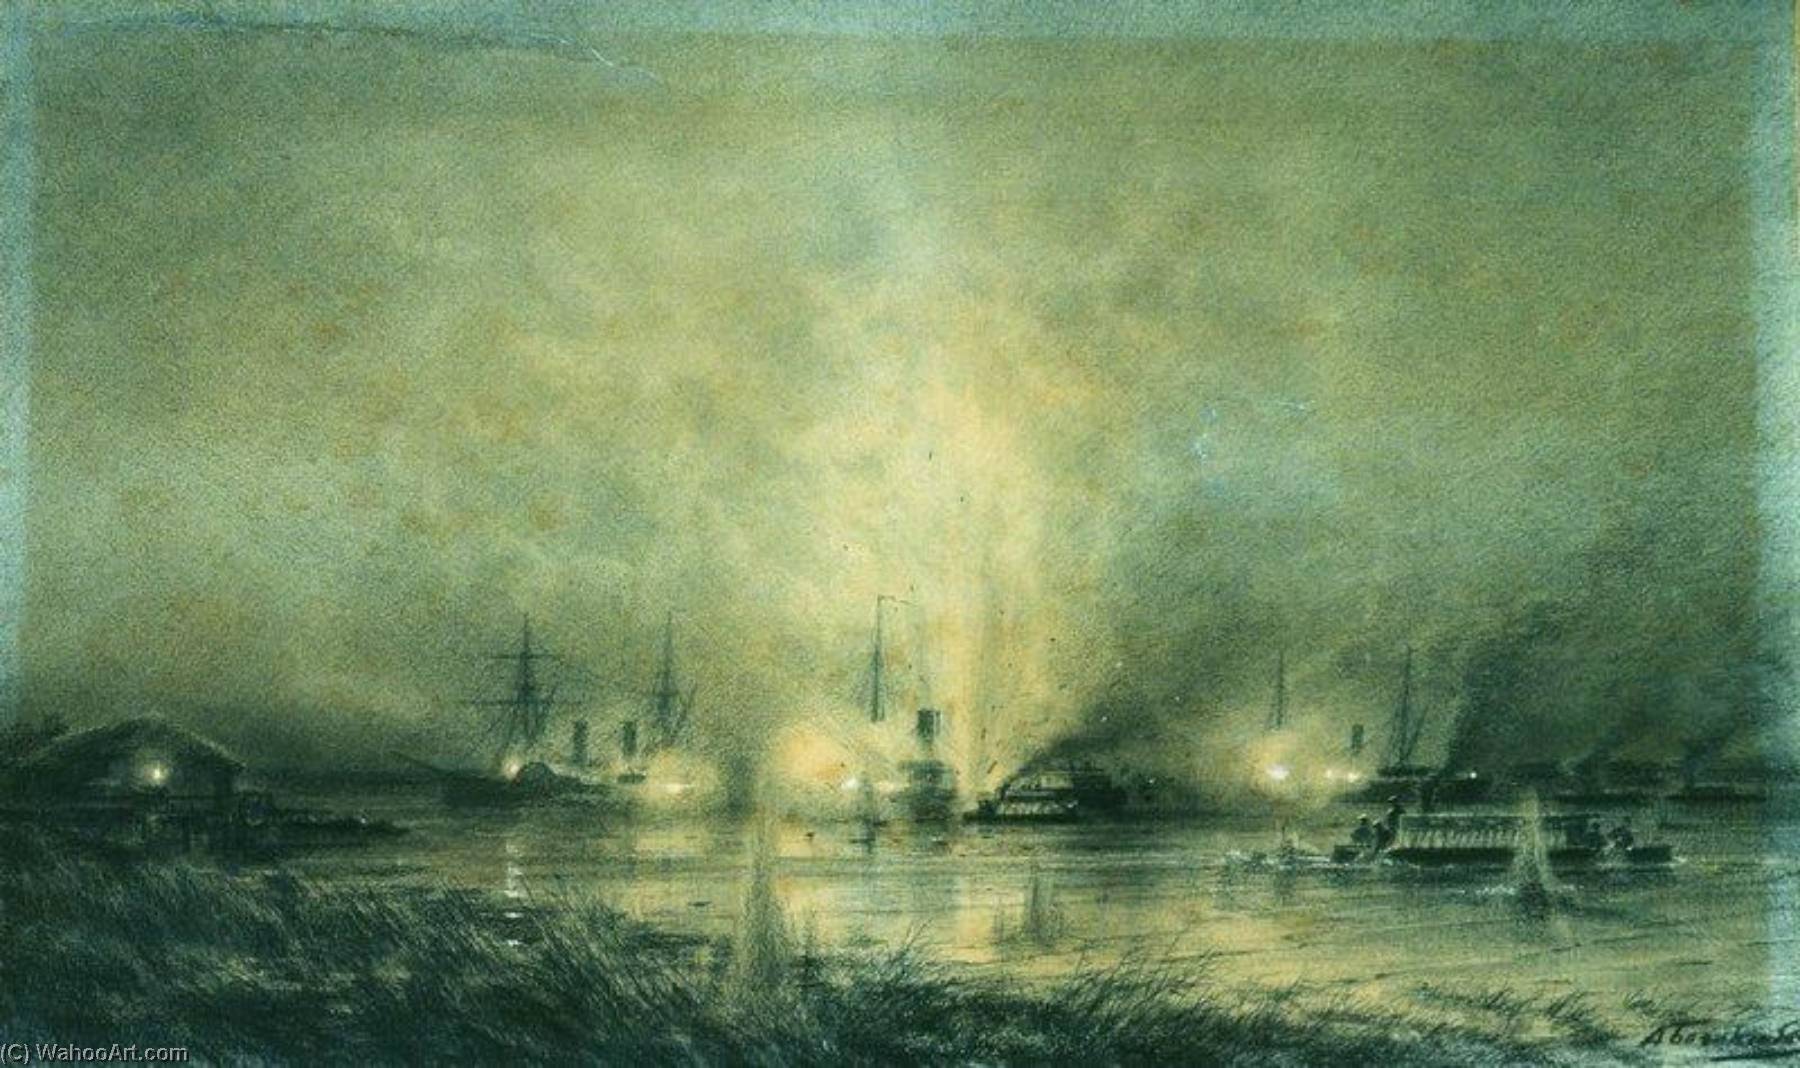 Achat Reproductions D'art Explosion d`un navire de guerre turc sur le Danube, 1878 de Alexey Petrovich Bogolyubov | ArtsDot.com